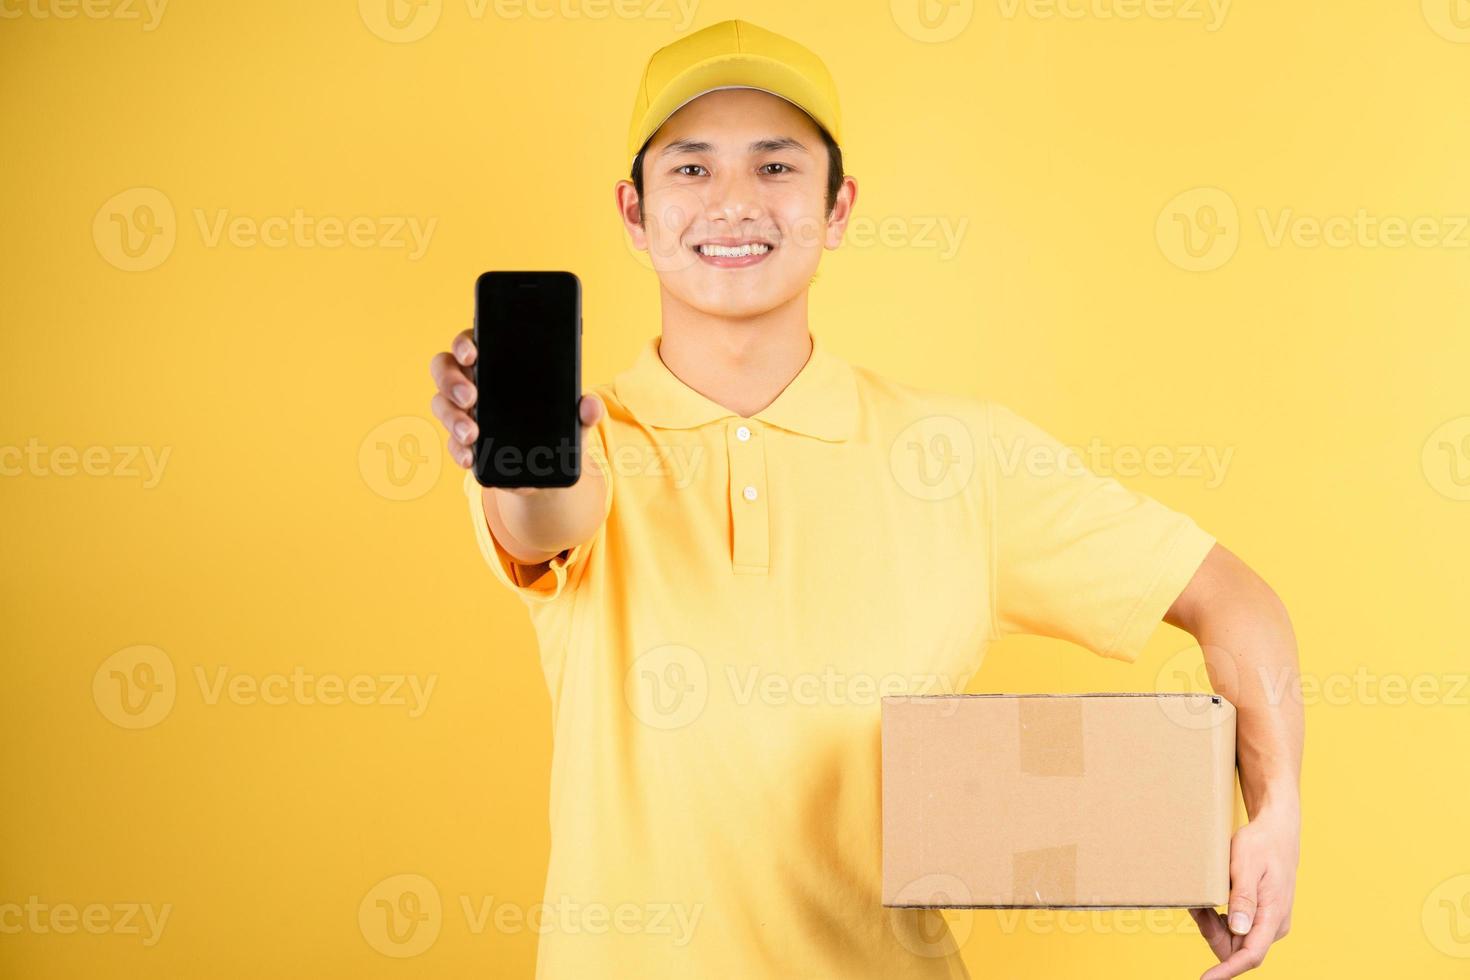 entrega retrato masculino segurando a caixa de carga e segurando o telefone para a frente sobre fundo amarelo foto